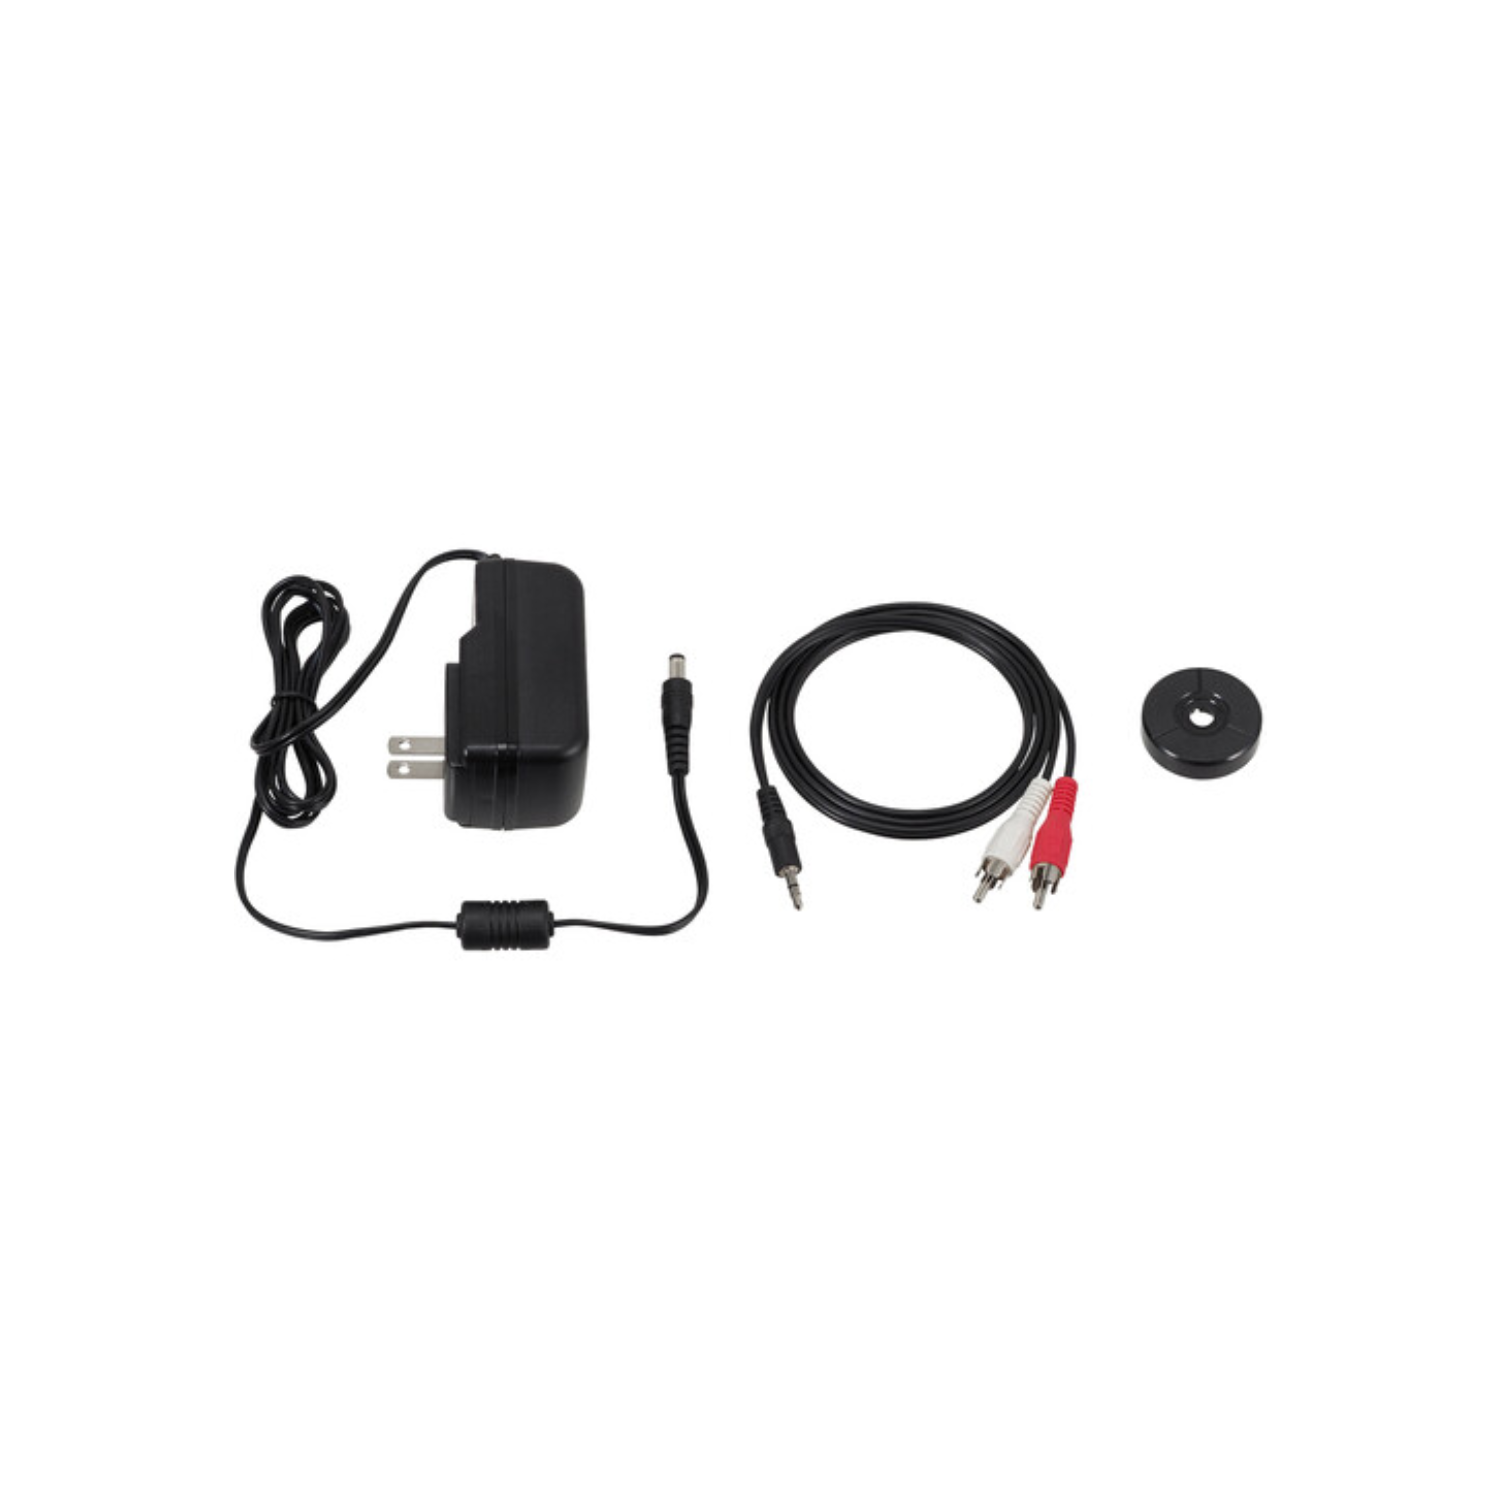 Audio-Technica Consumer AT-LP60X Stereo Turntable Black Analog + USB